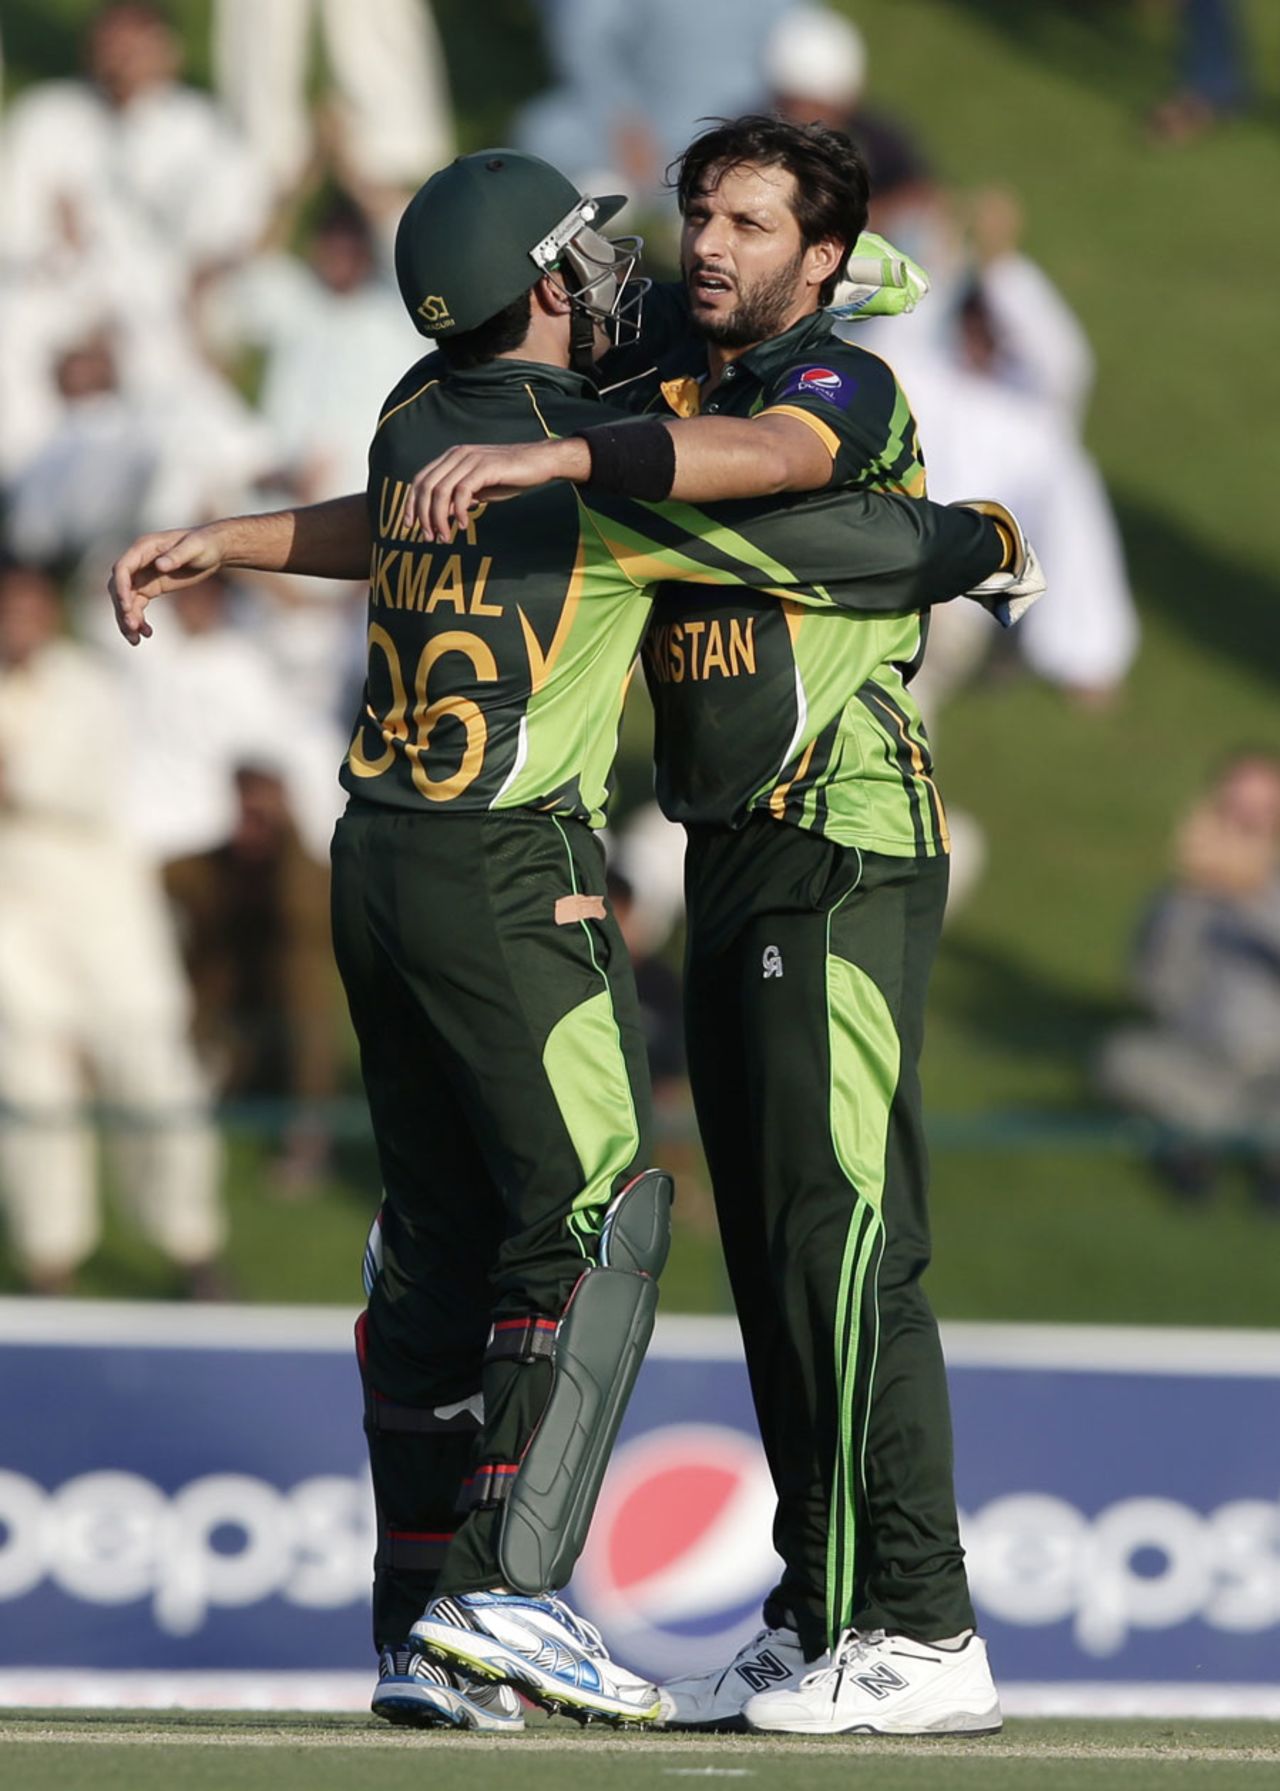 Shahid Afridi celebrates a wicket, Pakistan v South Africa, 3rd ODI, Abu Dhabi, November 6, 2013